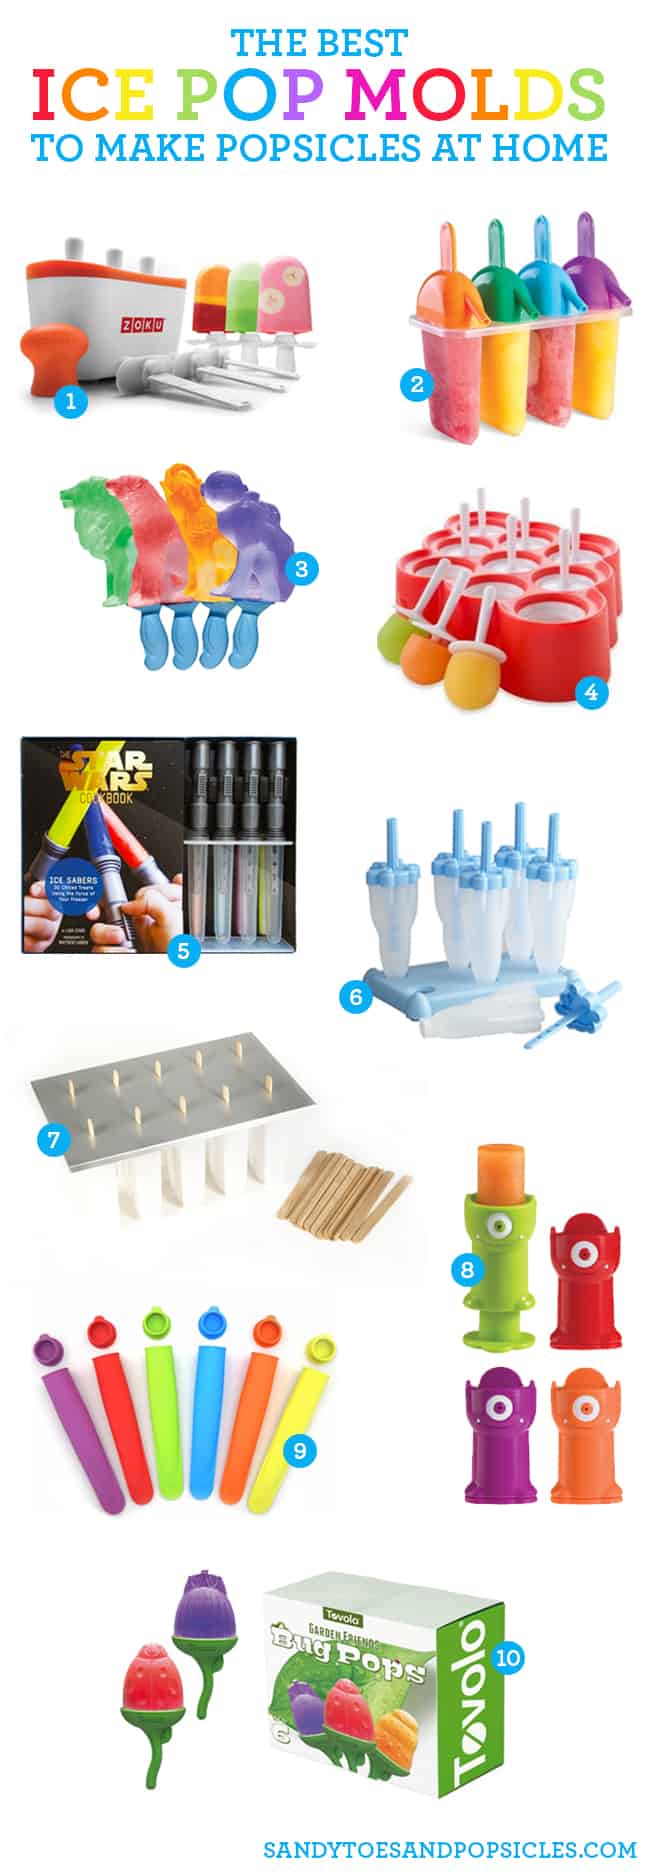 https://www.sandytoesandpopsicles.com/wp-content/uploads/2014/05/10-best-popsicle-molds-ice-pop-molds1.jpg